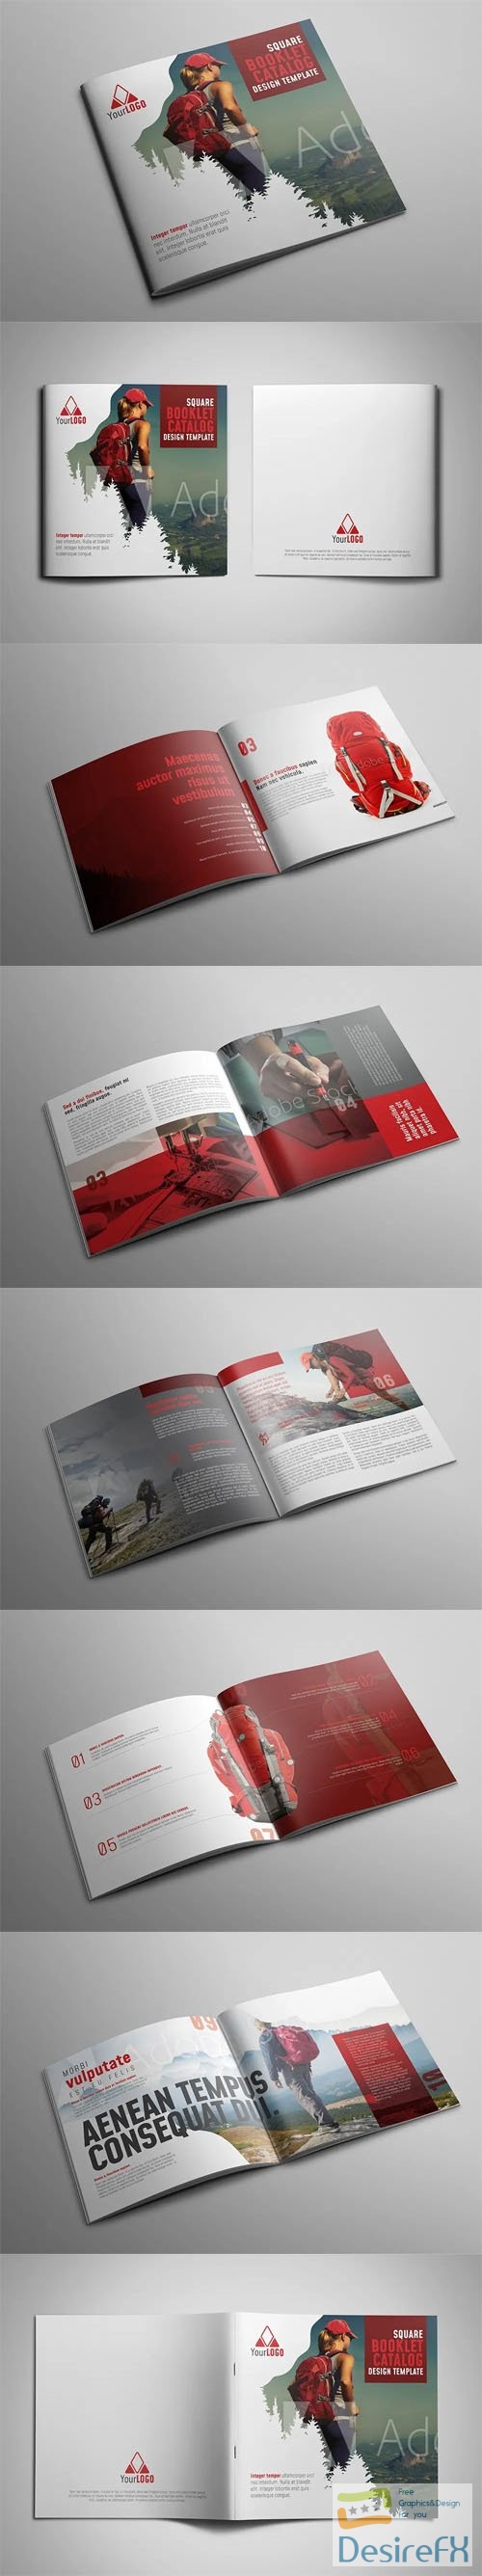 Square Booklet Catalog INDD Design Template